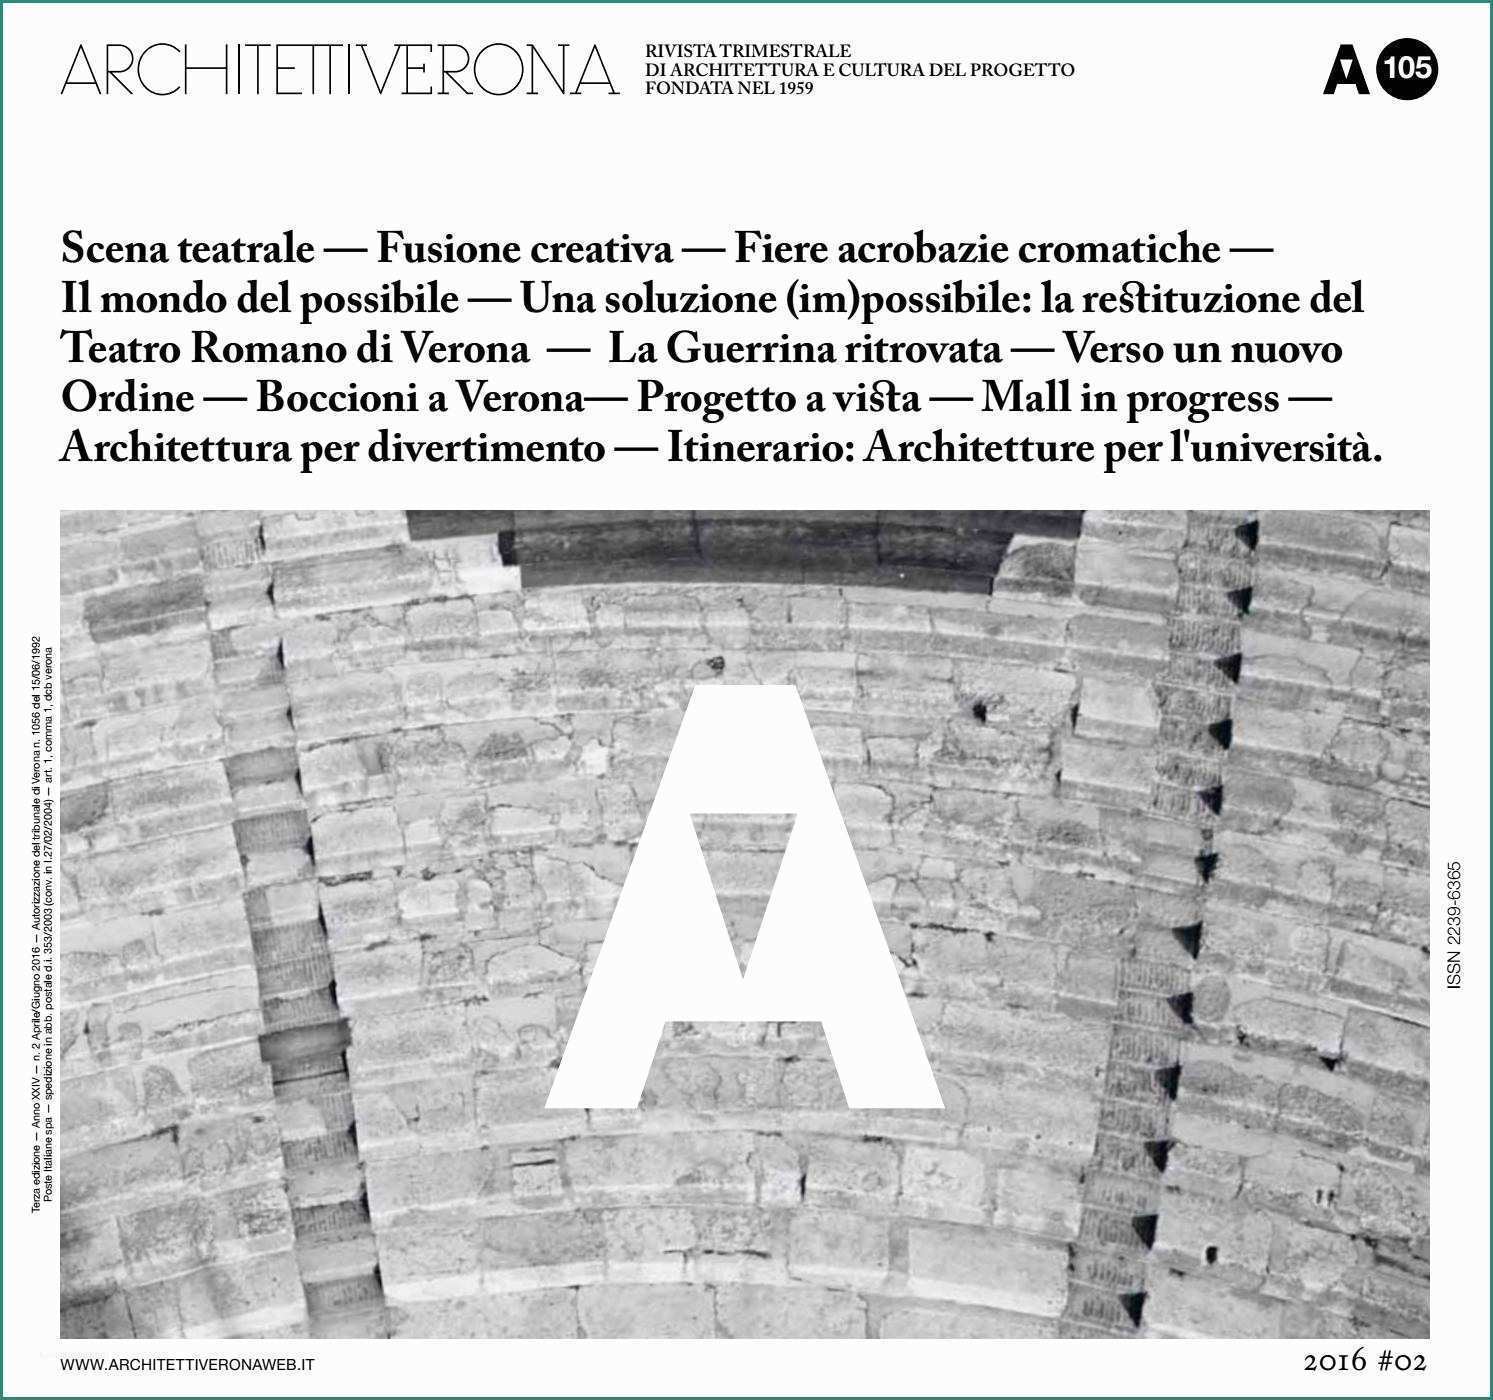 Impianto Idrico Dwg E Architettiverona 105 by Architettiverona issuu